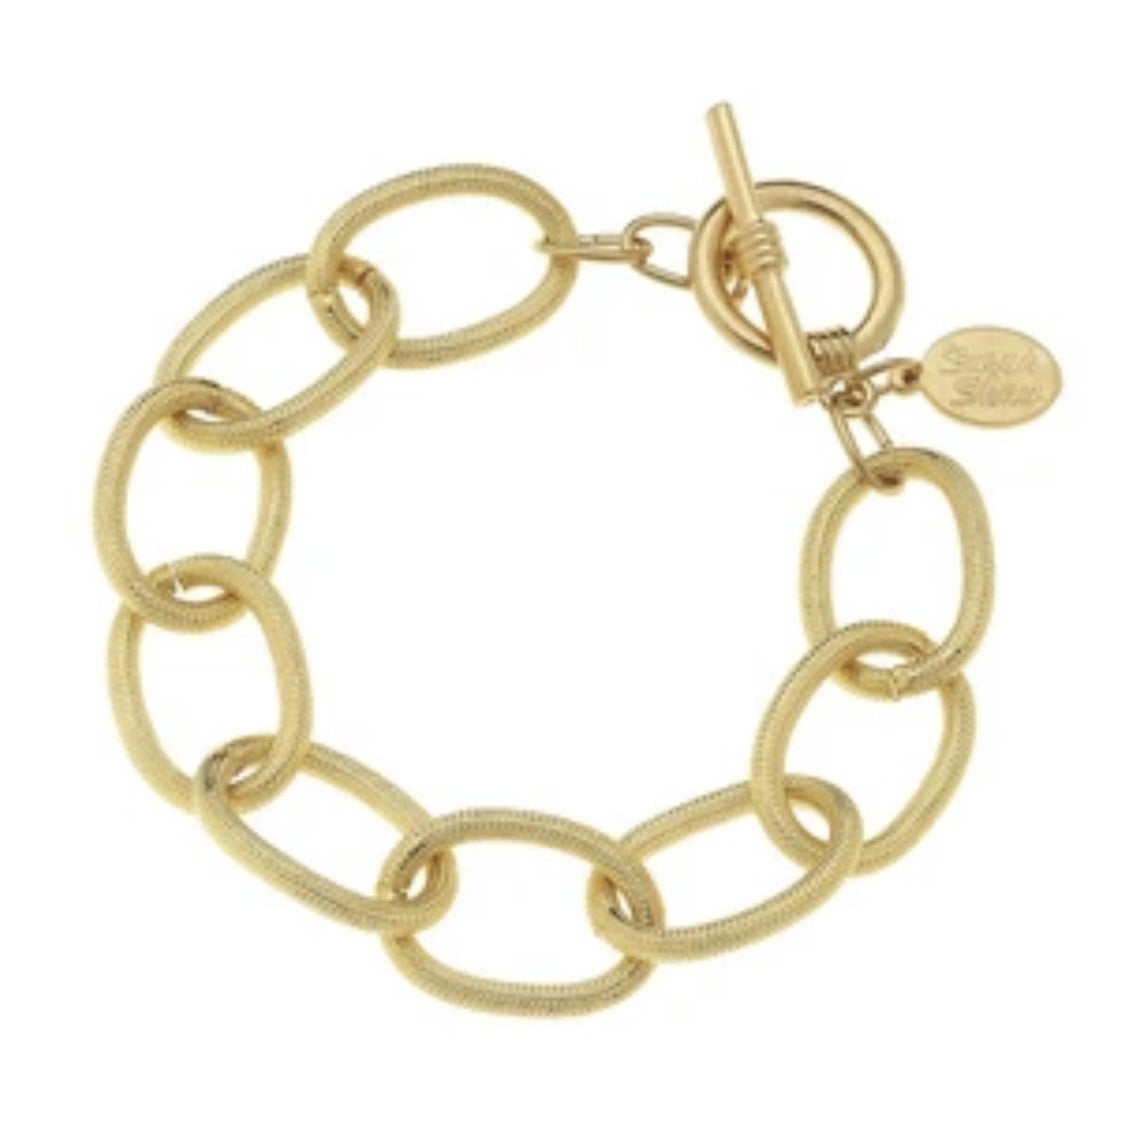 Susan Shaw Loop Chain Bracelet